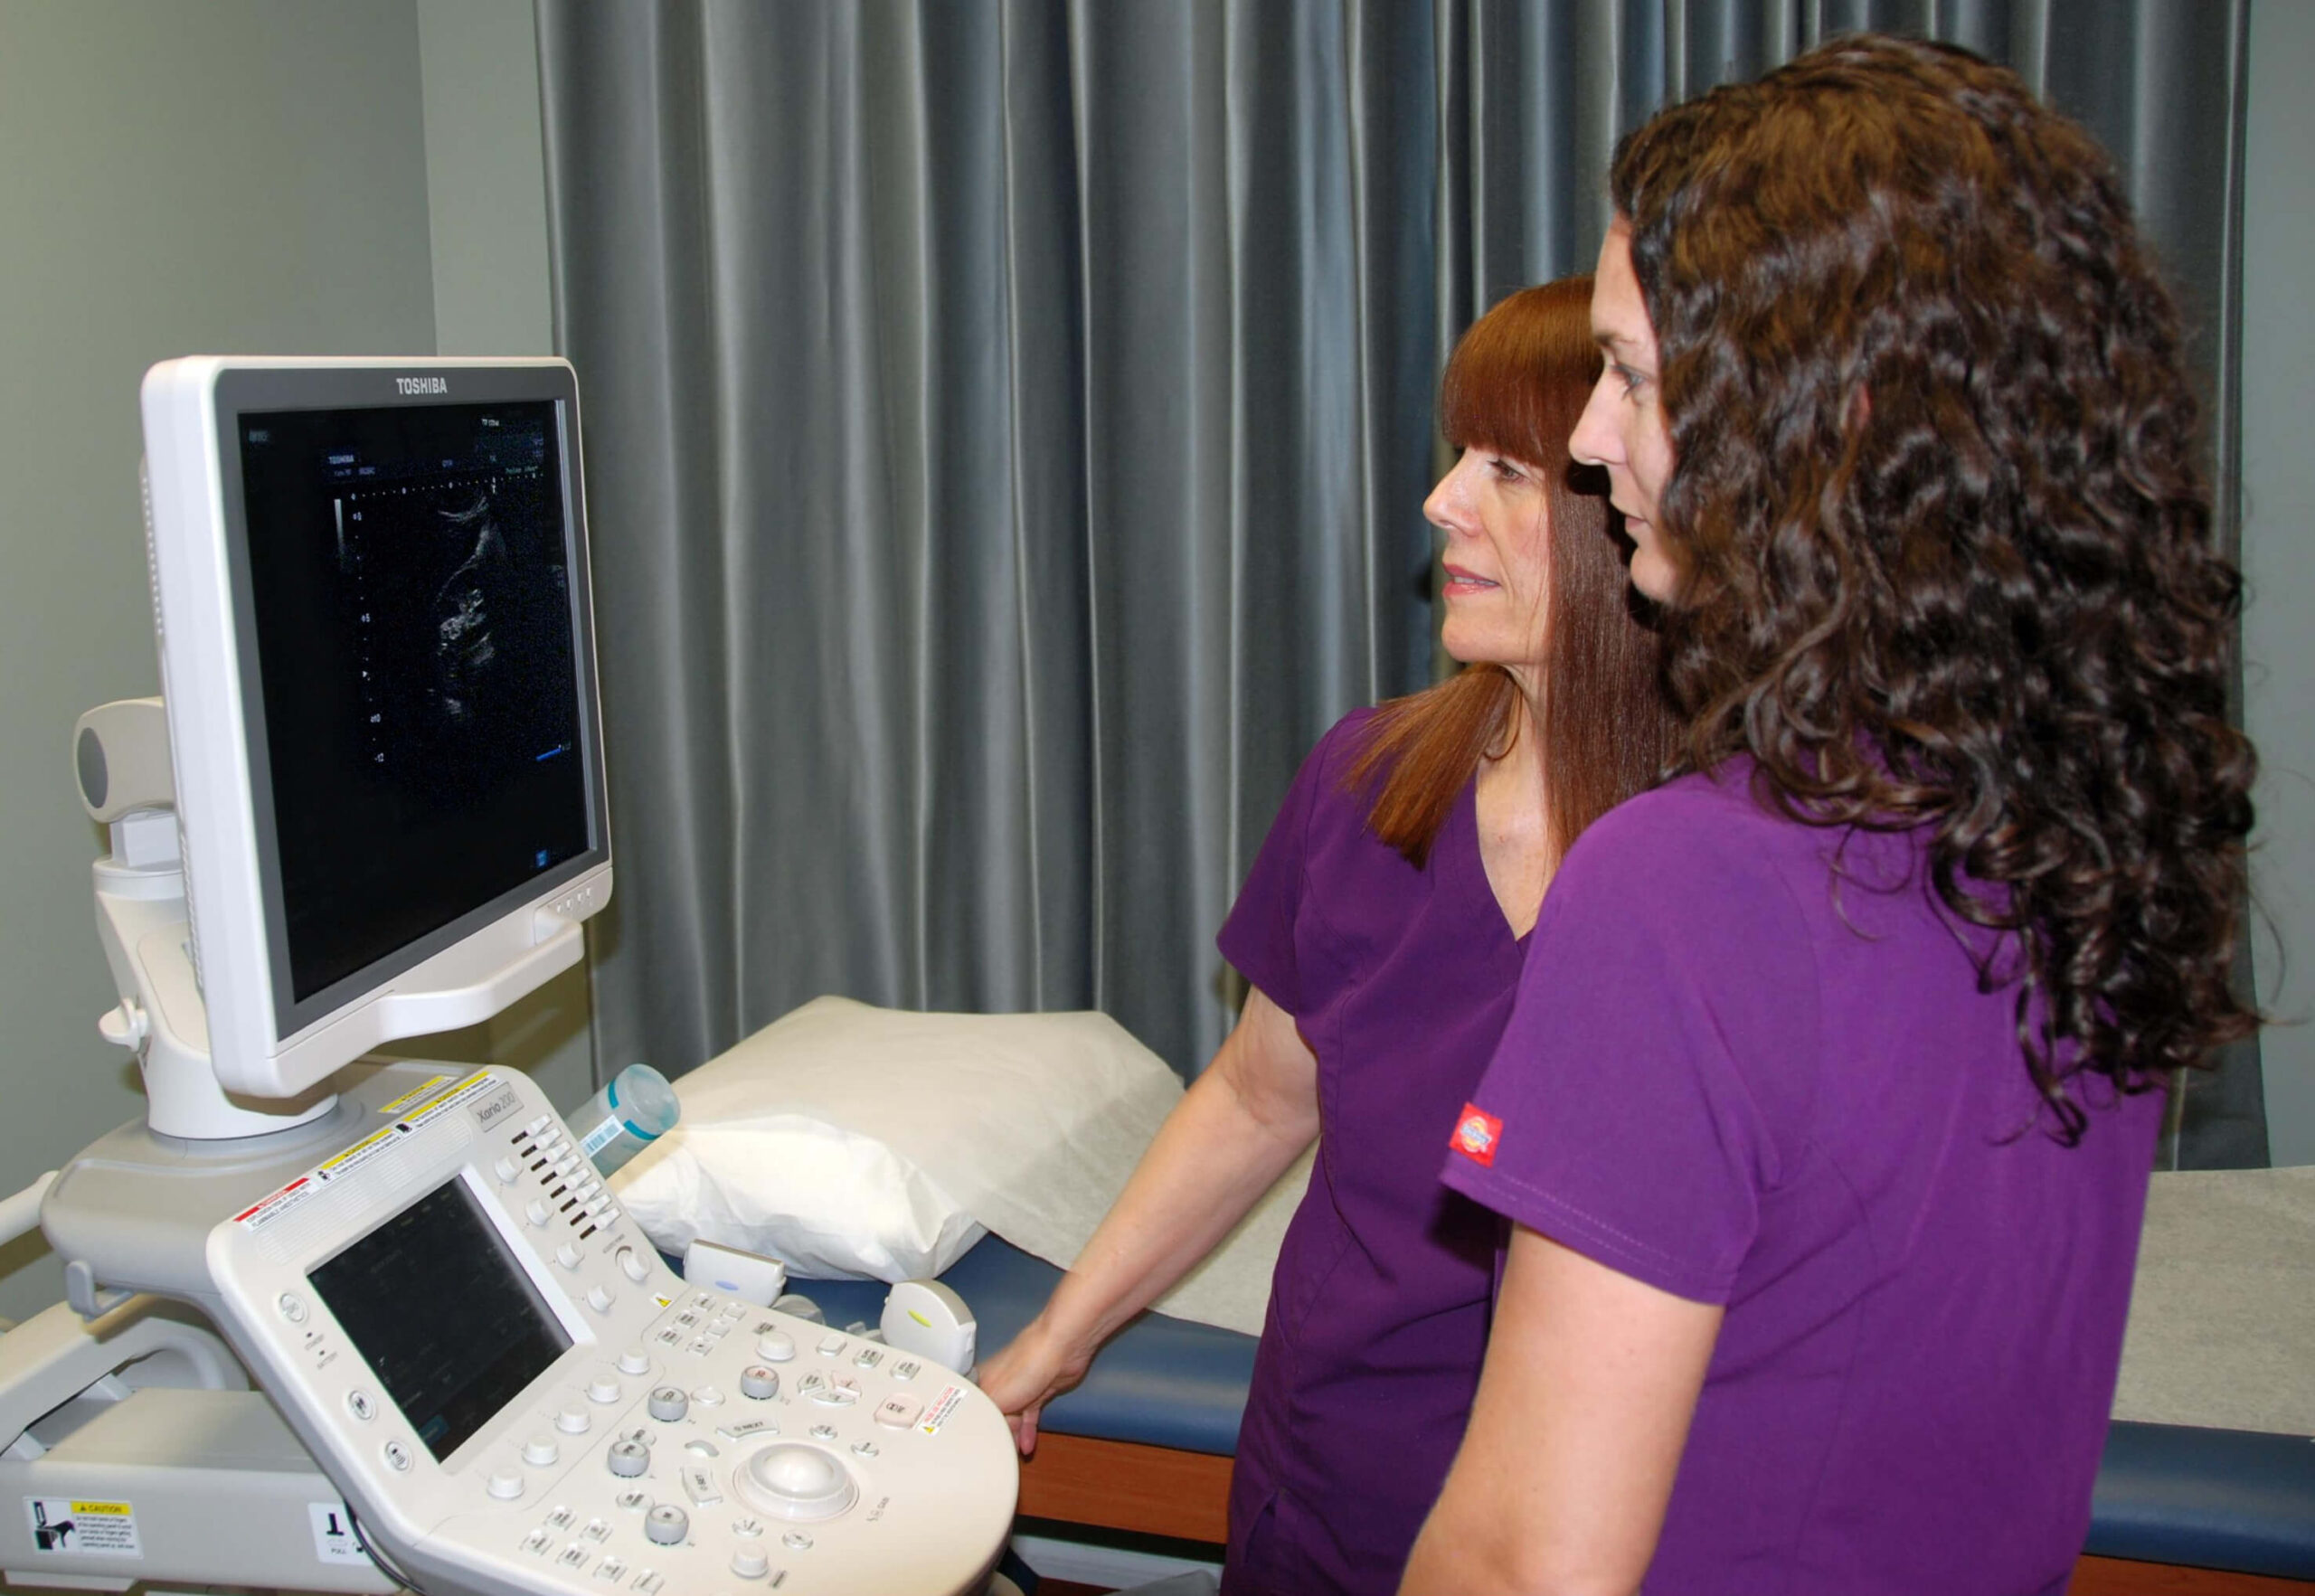 Mammography & Ultrasound Imaging Center (MUSIC, PLLC)